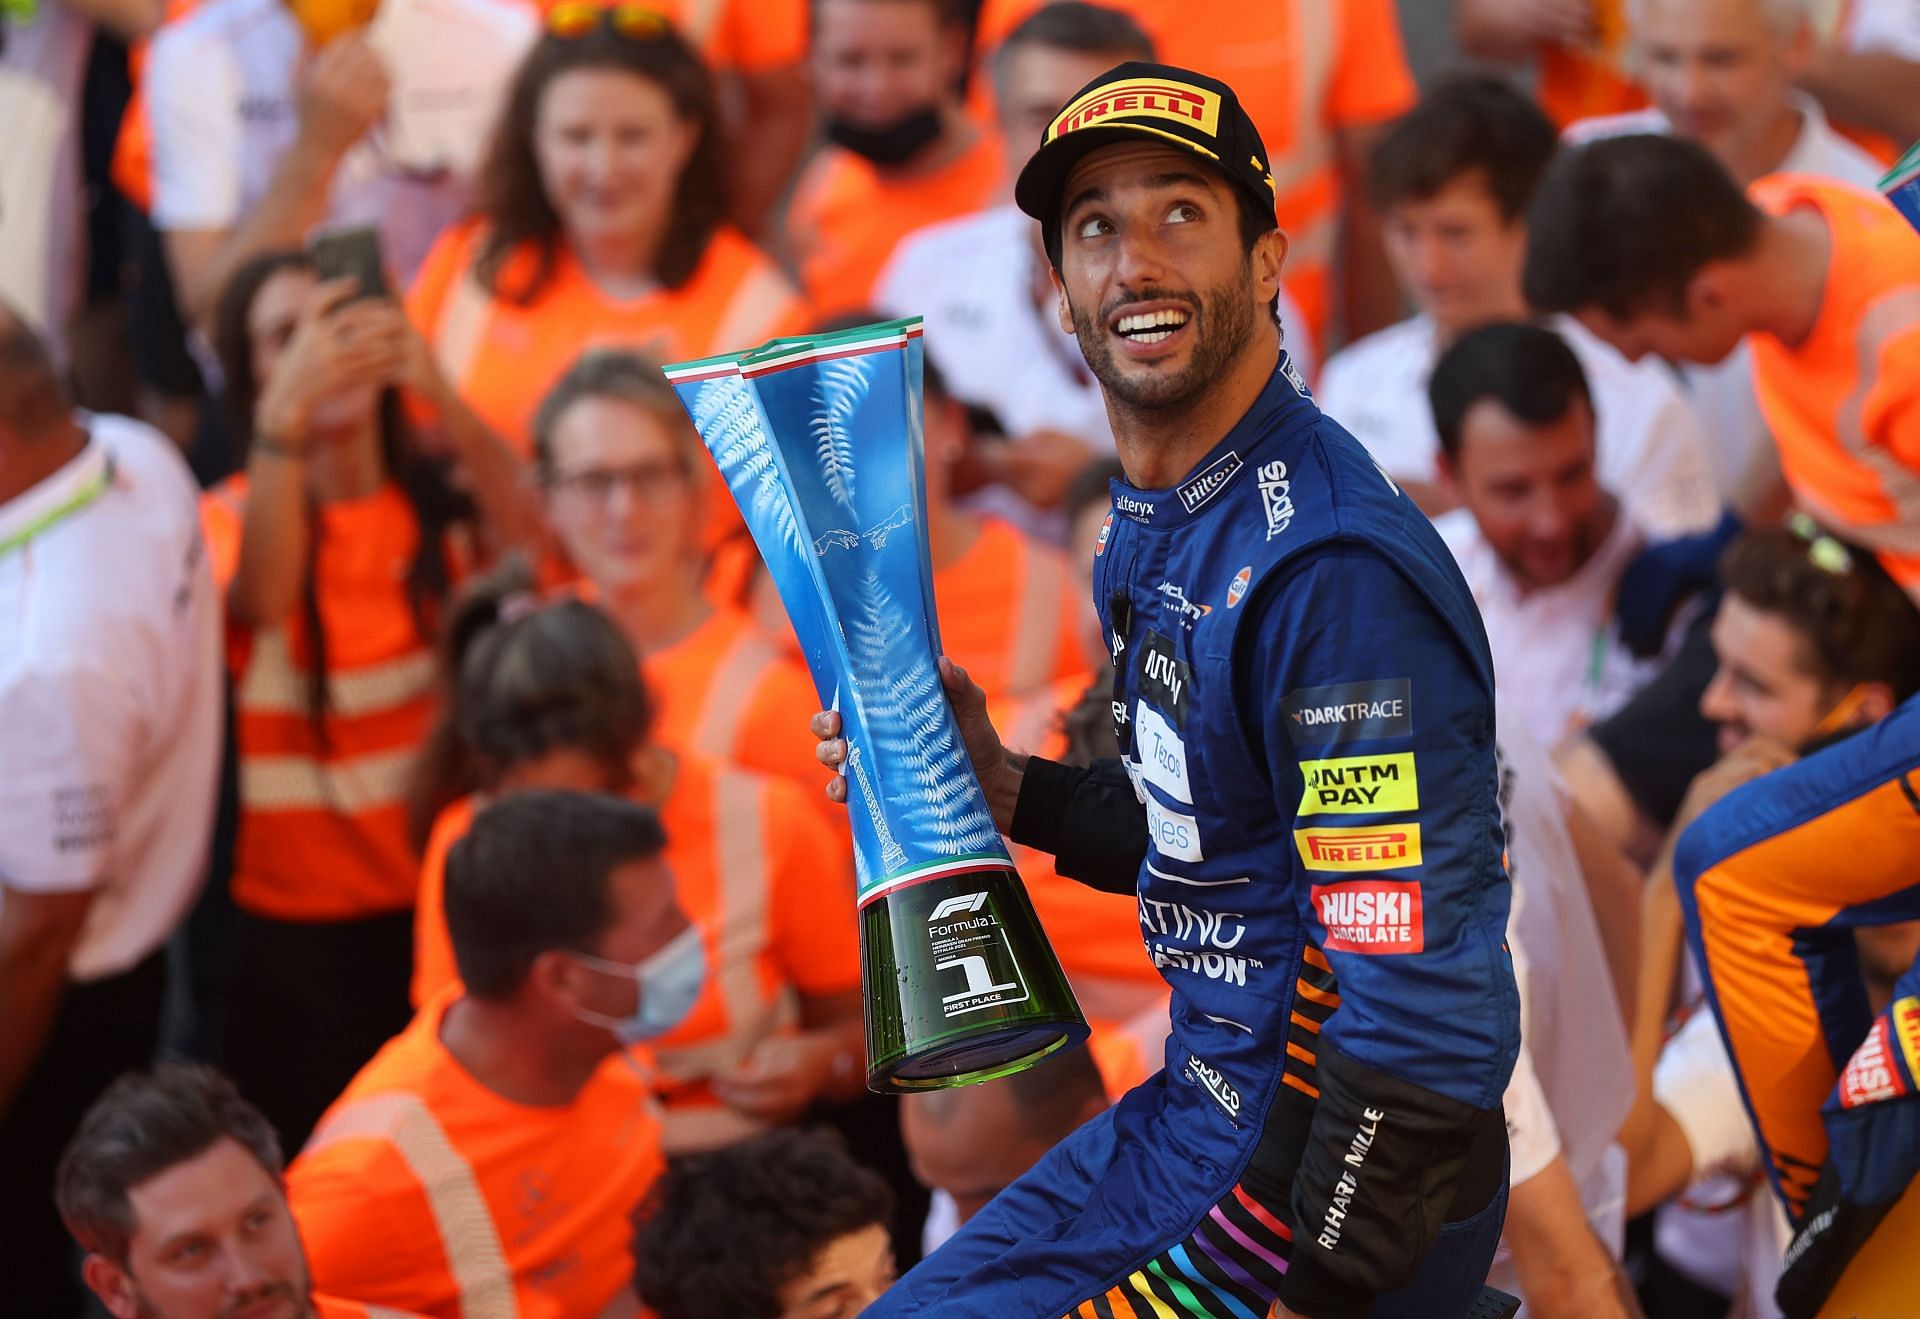 F1 Grand Prix of Italy - Daniel Ricciardo (Photo by Lars Baron/Getty Images)